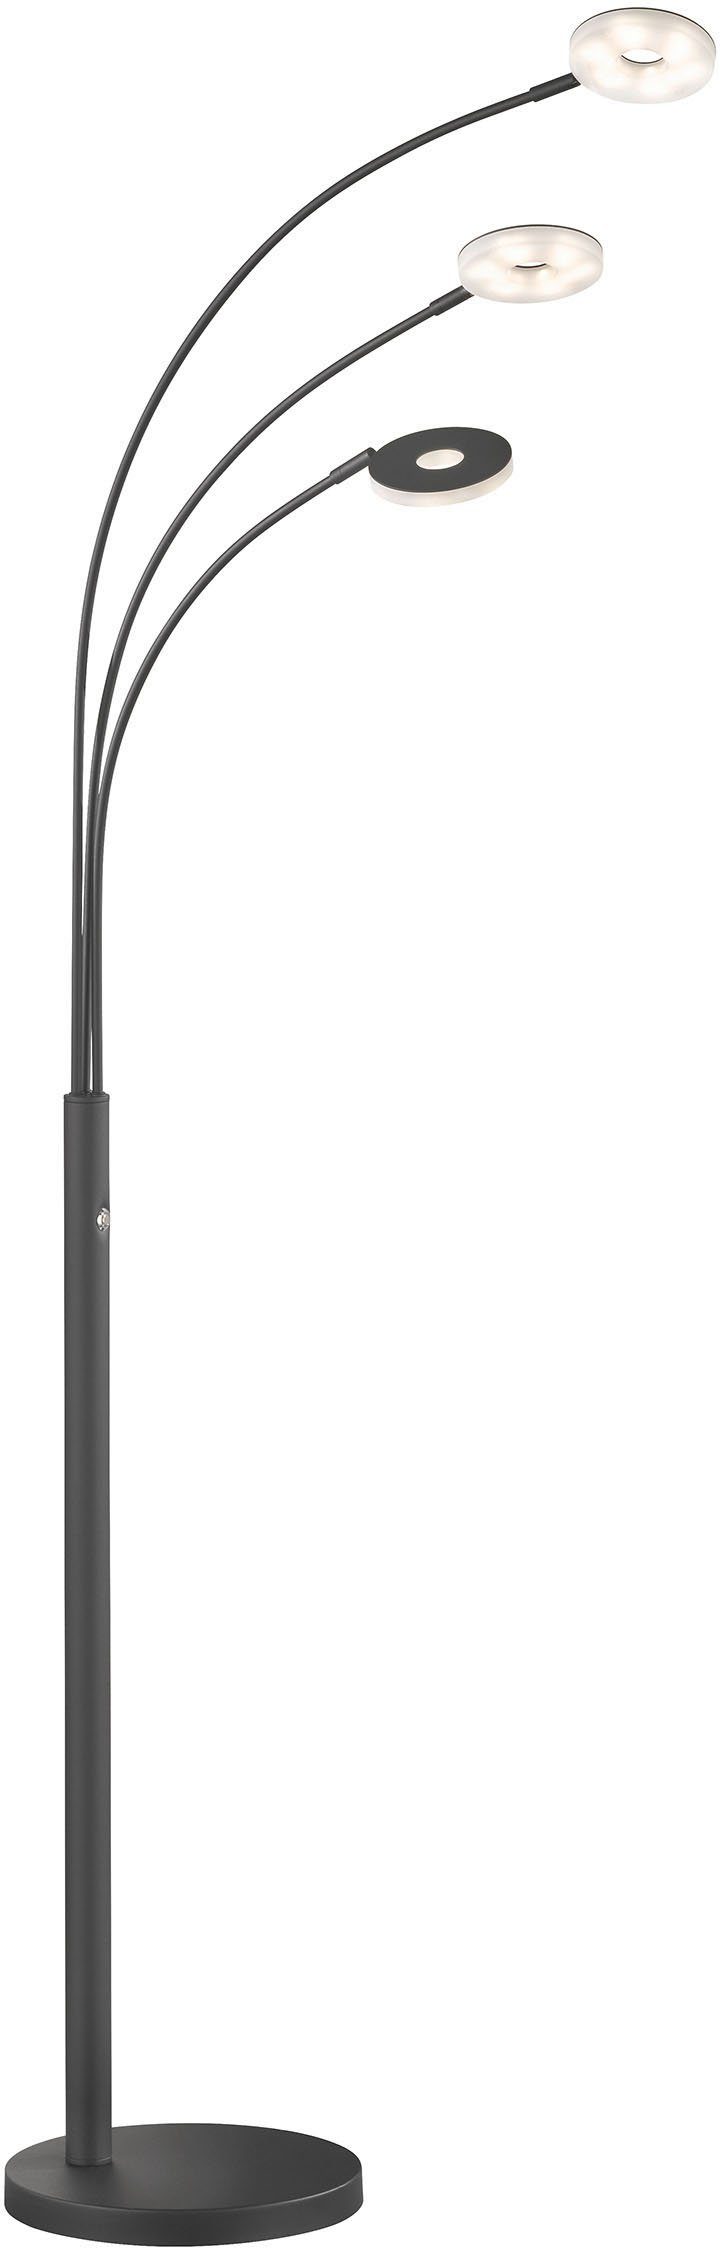 FISCHER & HONSEL LED Bogenlampe kaltweiß fest warmweiß - Dent, integriert, LED Dimmfunktion